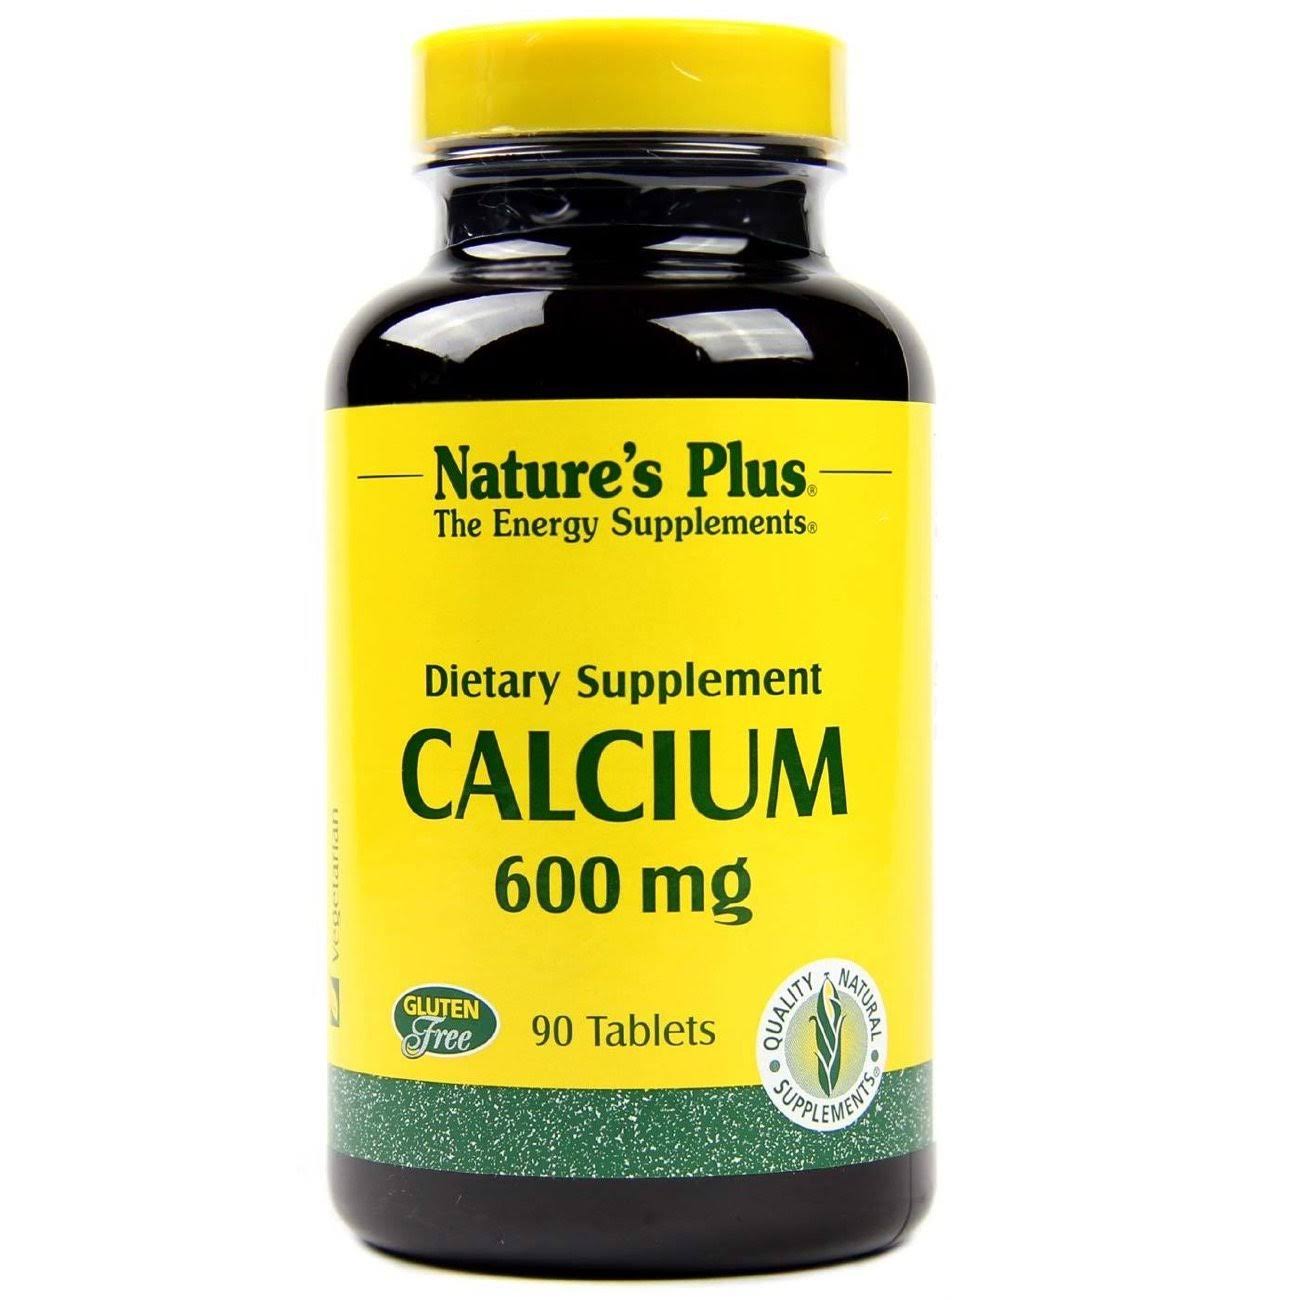 Nature's Plus Calcium - 600 mg - 90 Tablets